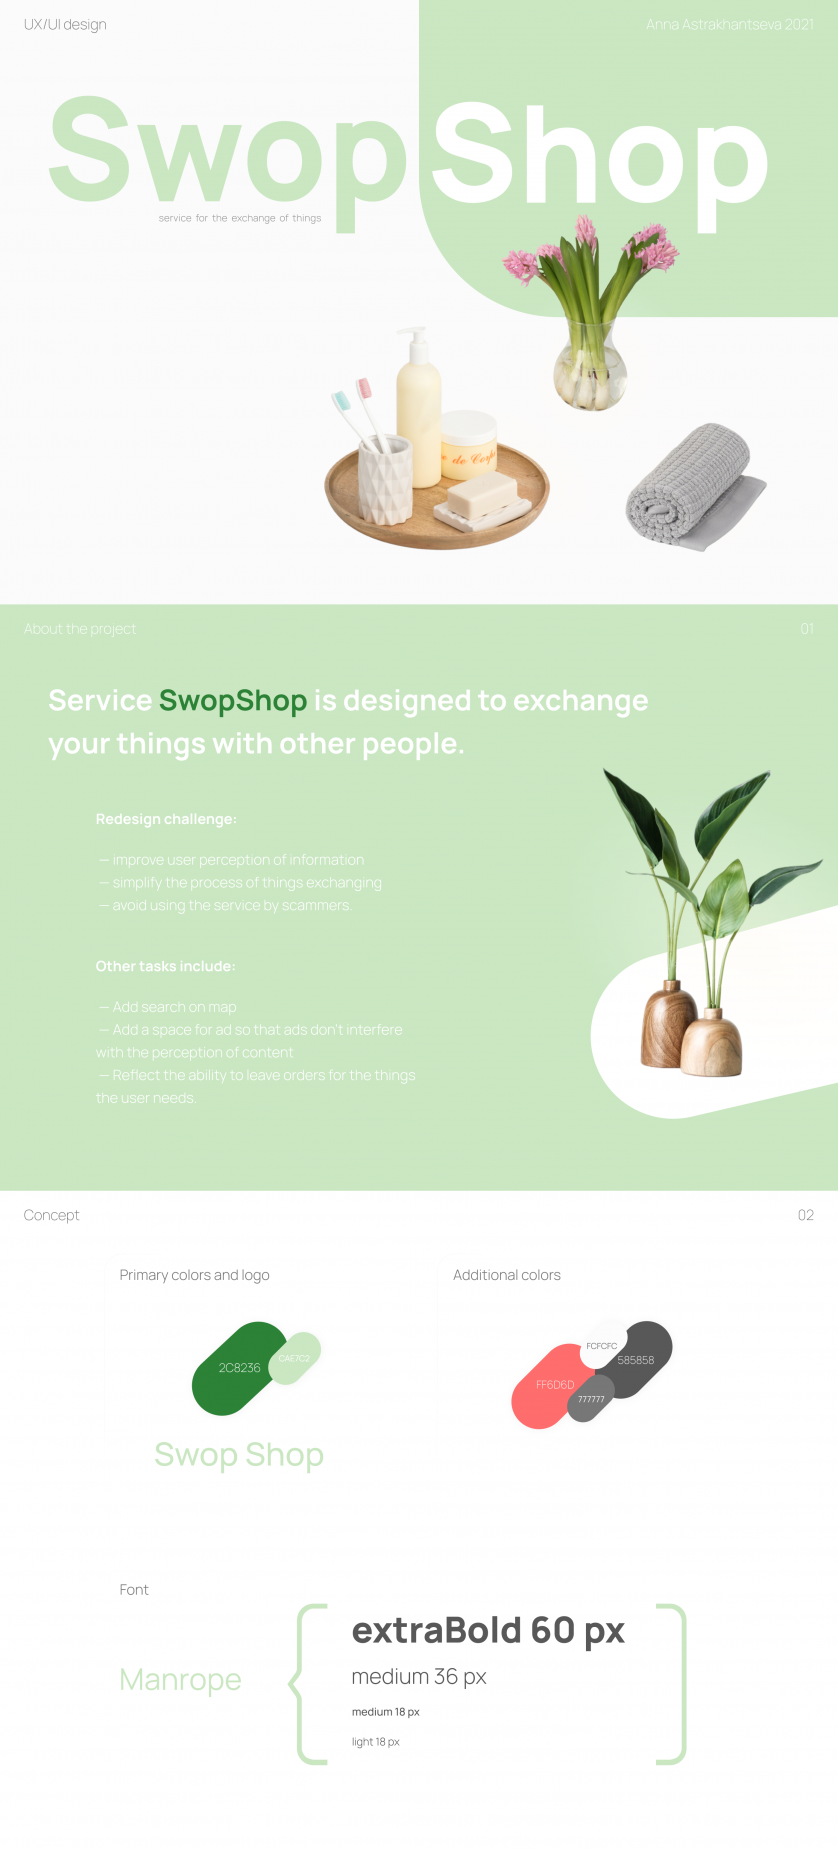 SwopShop - redesign website image 1